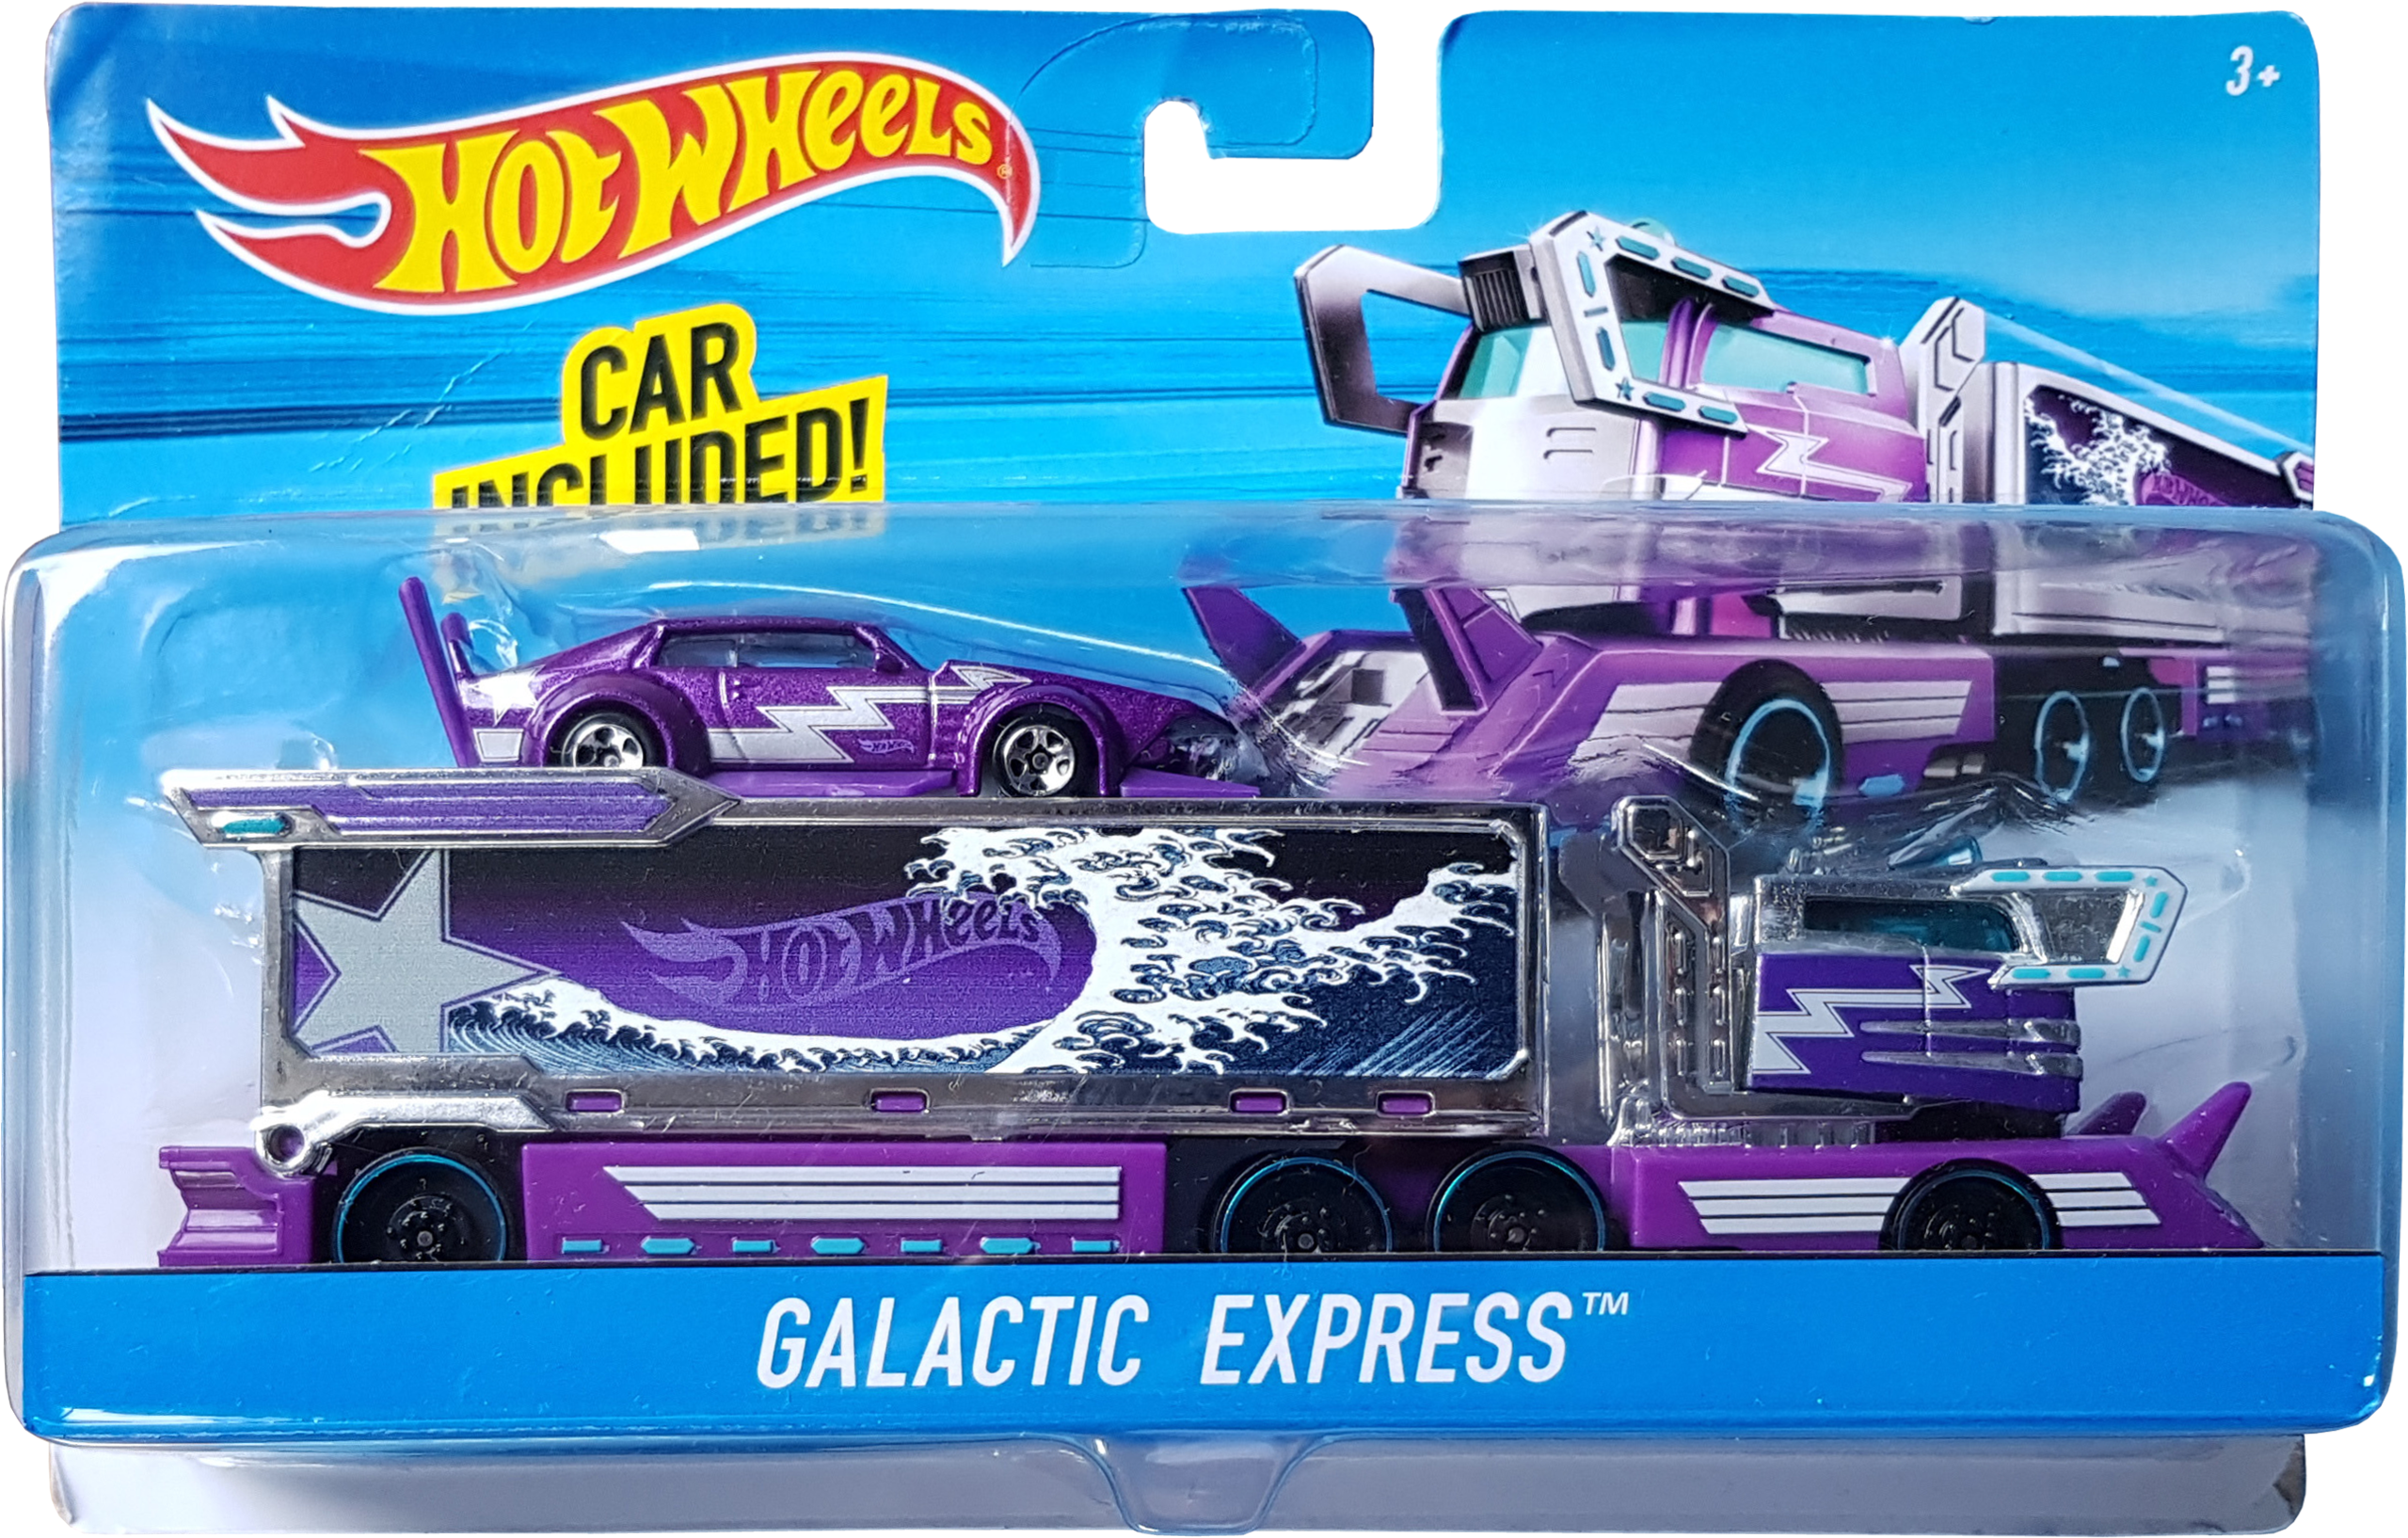 Hot wheels galactic express dekotora hauler DKF81 2015 *new.